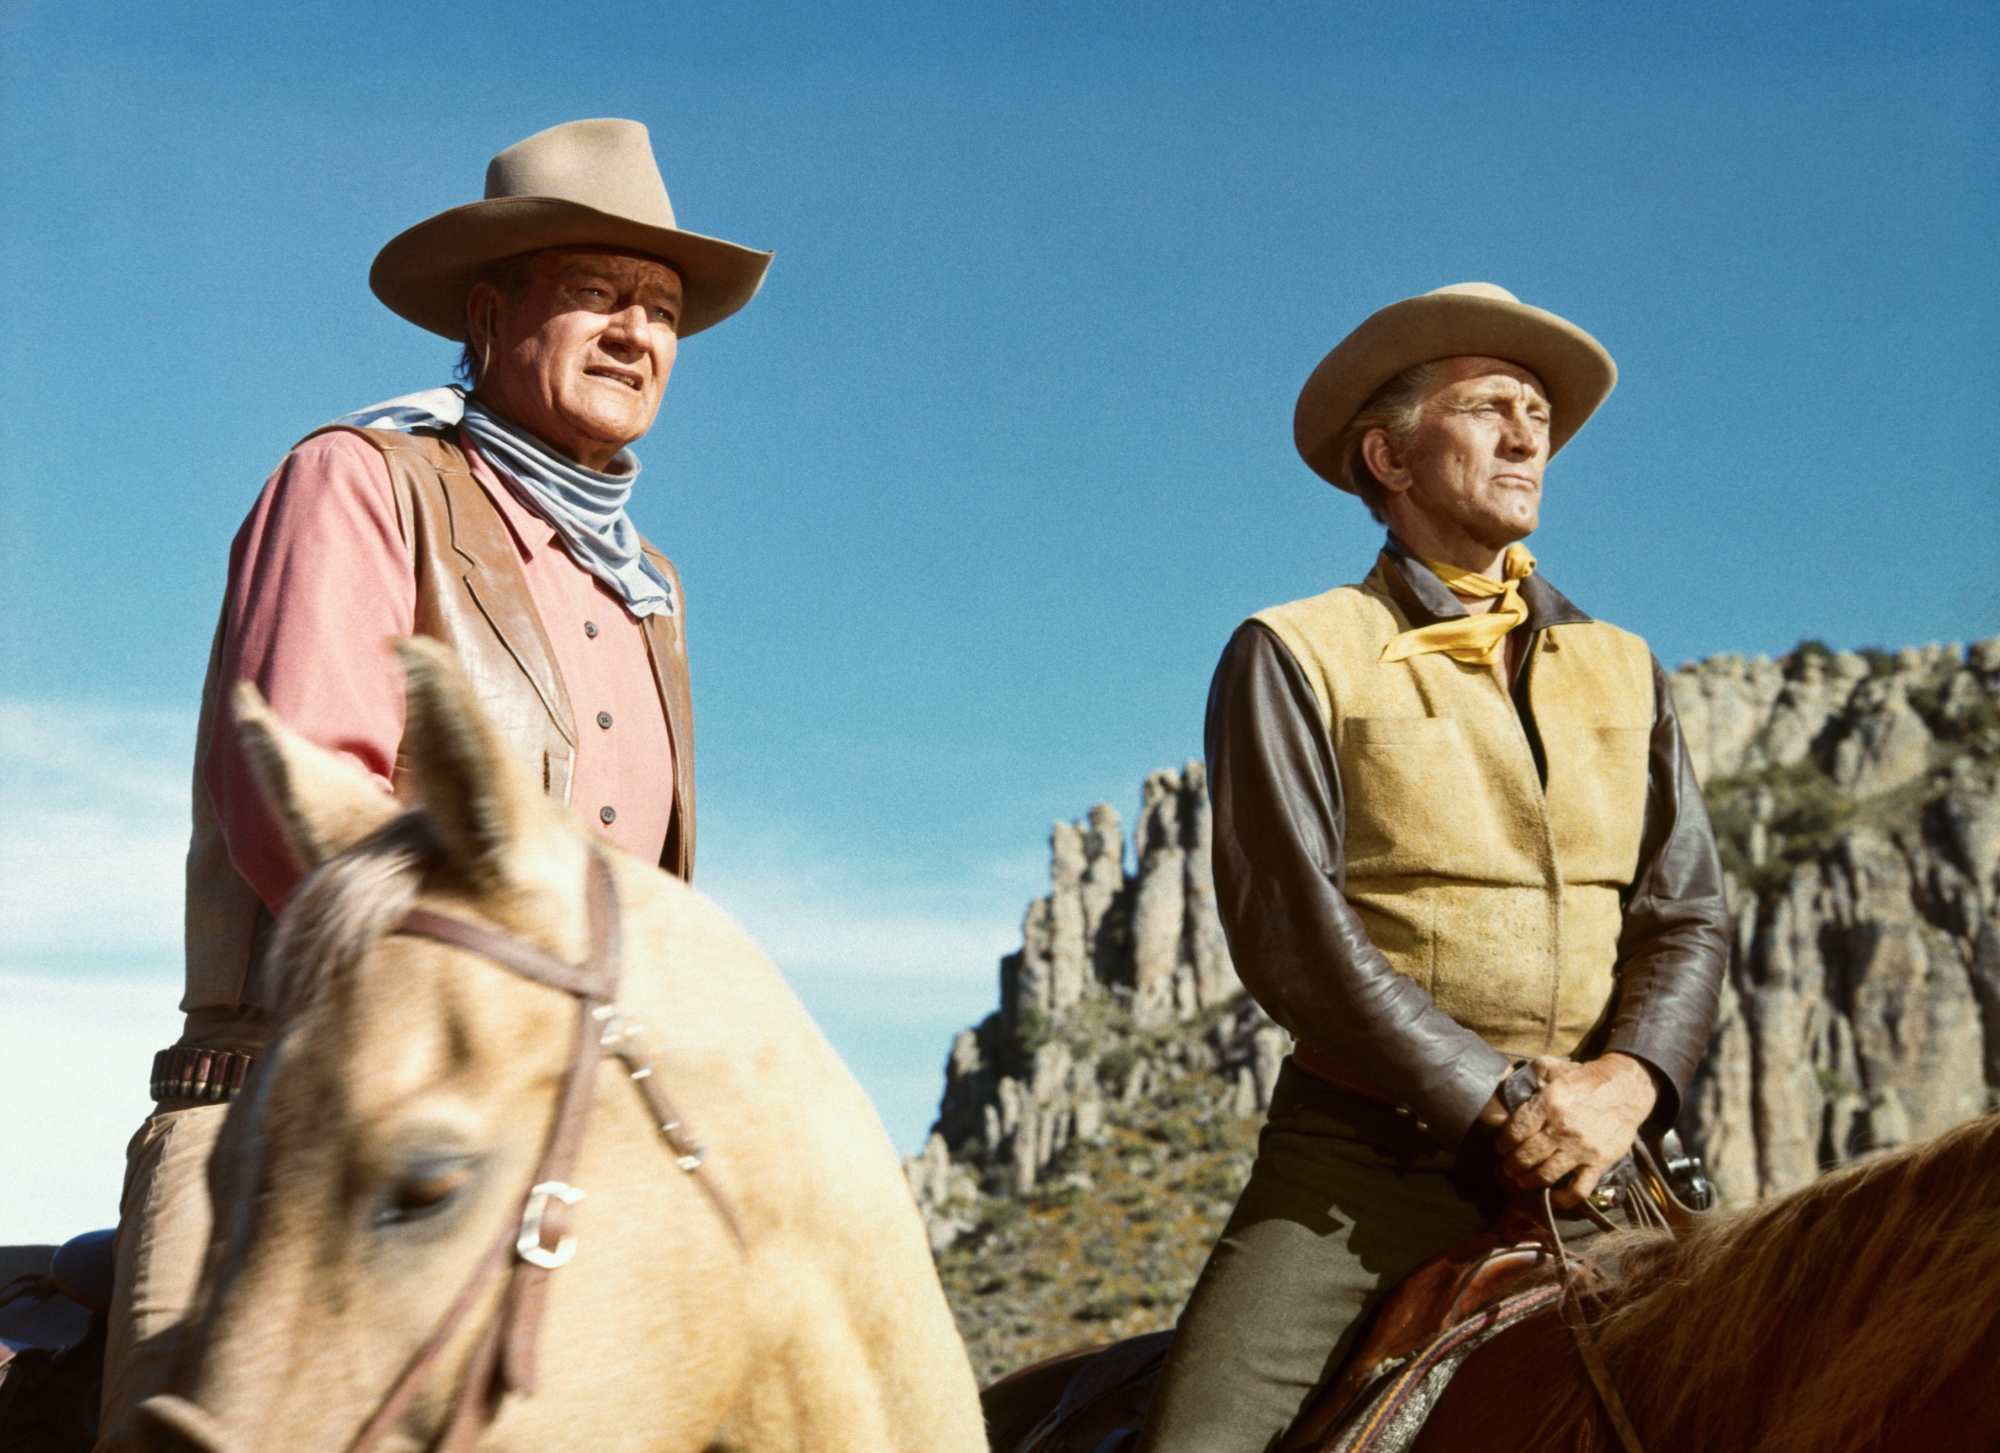 John Wayne as Taw Jackson and Kirk Douglas as Lomax in 'The War Wagon' sitting on horseback in cowboy uniforms